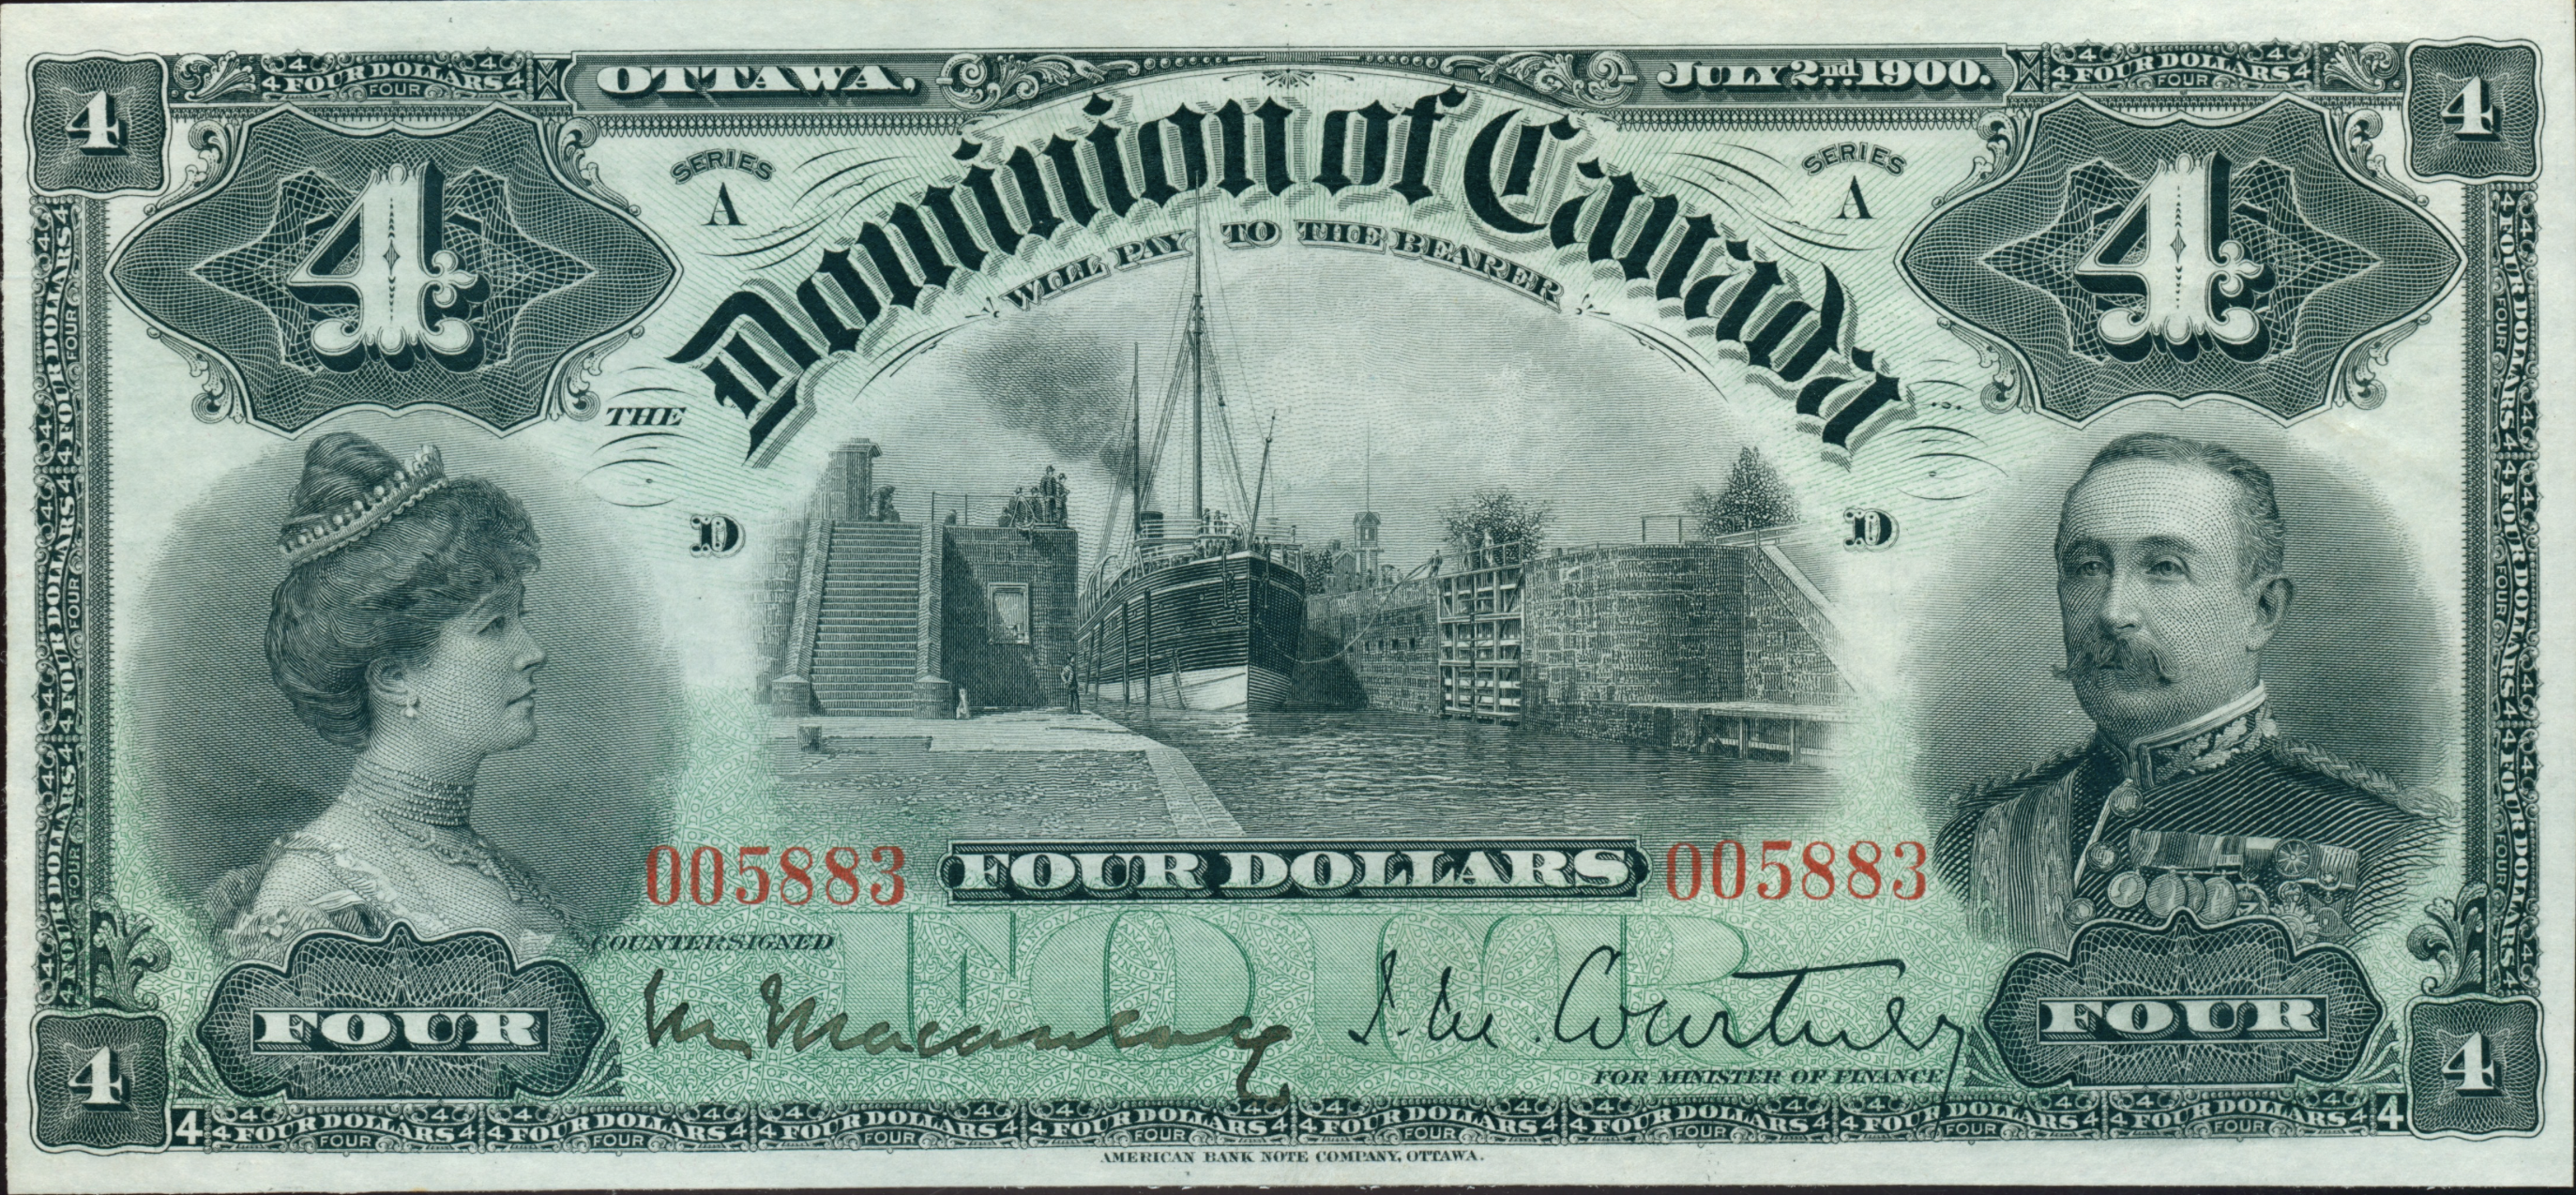 Доллар в 19 году. Доллар 1900 года. Доллар купюра. Старые банкноты США. Доллары 19 века.